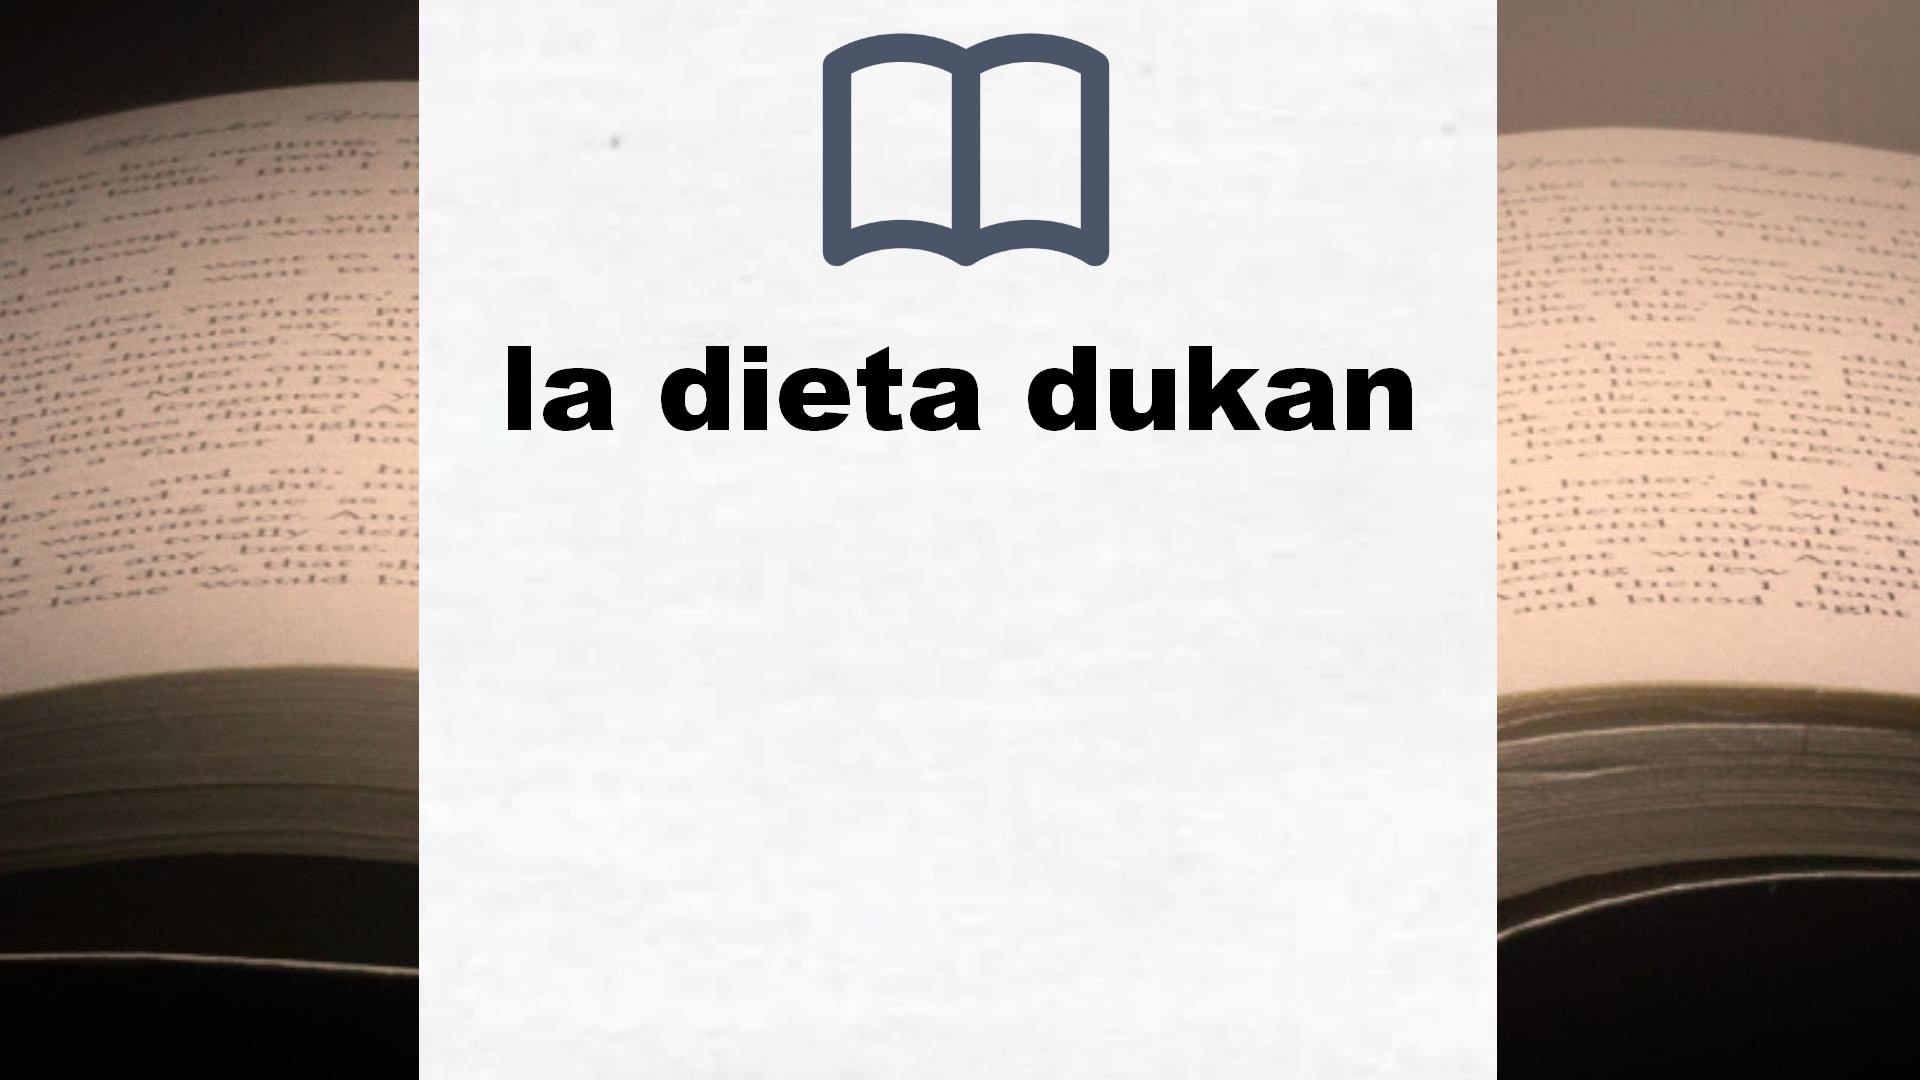 Libros sobre la dieta dukan